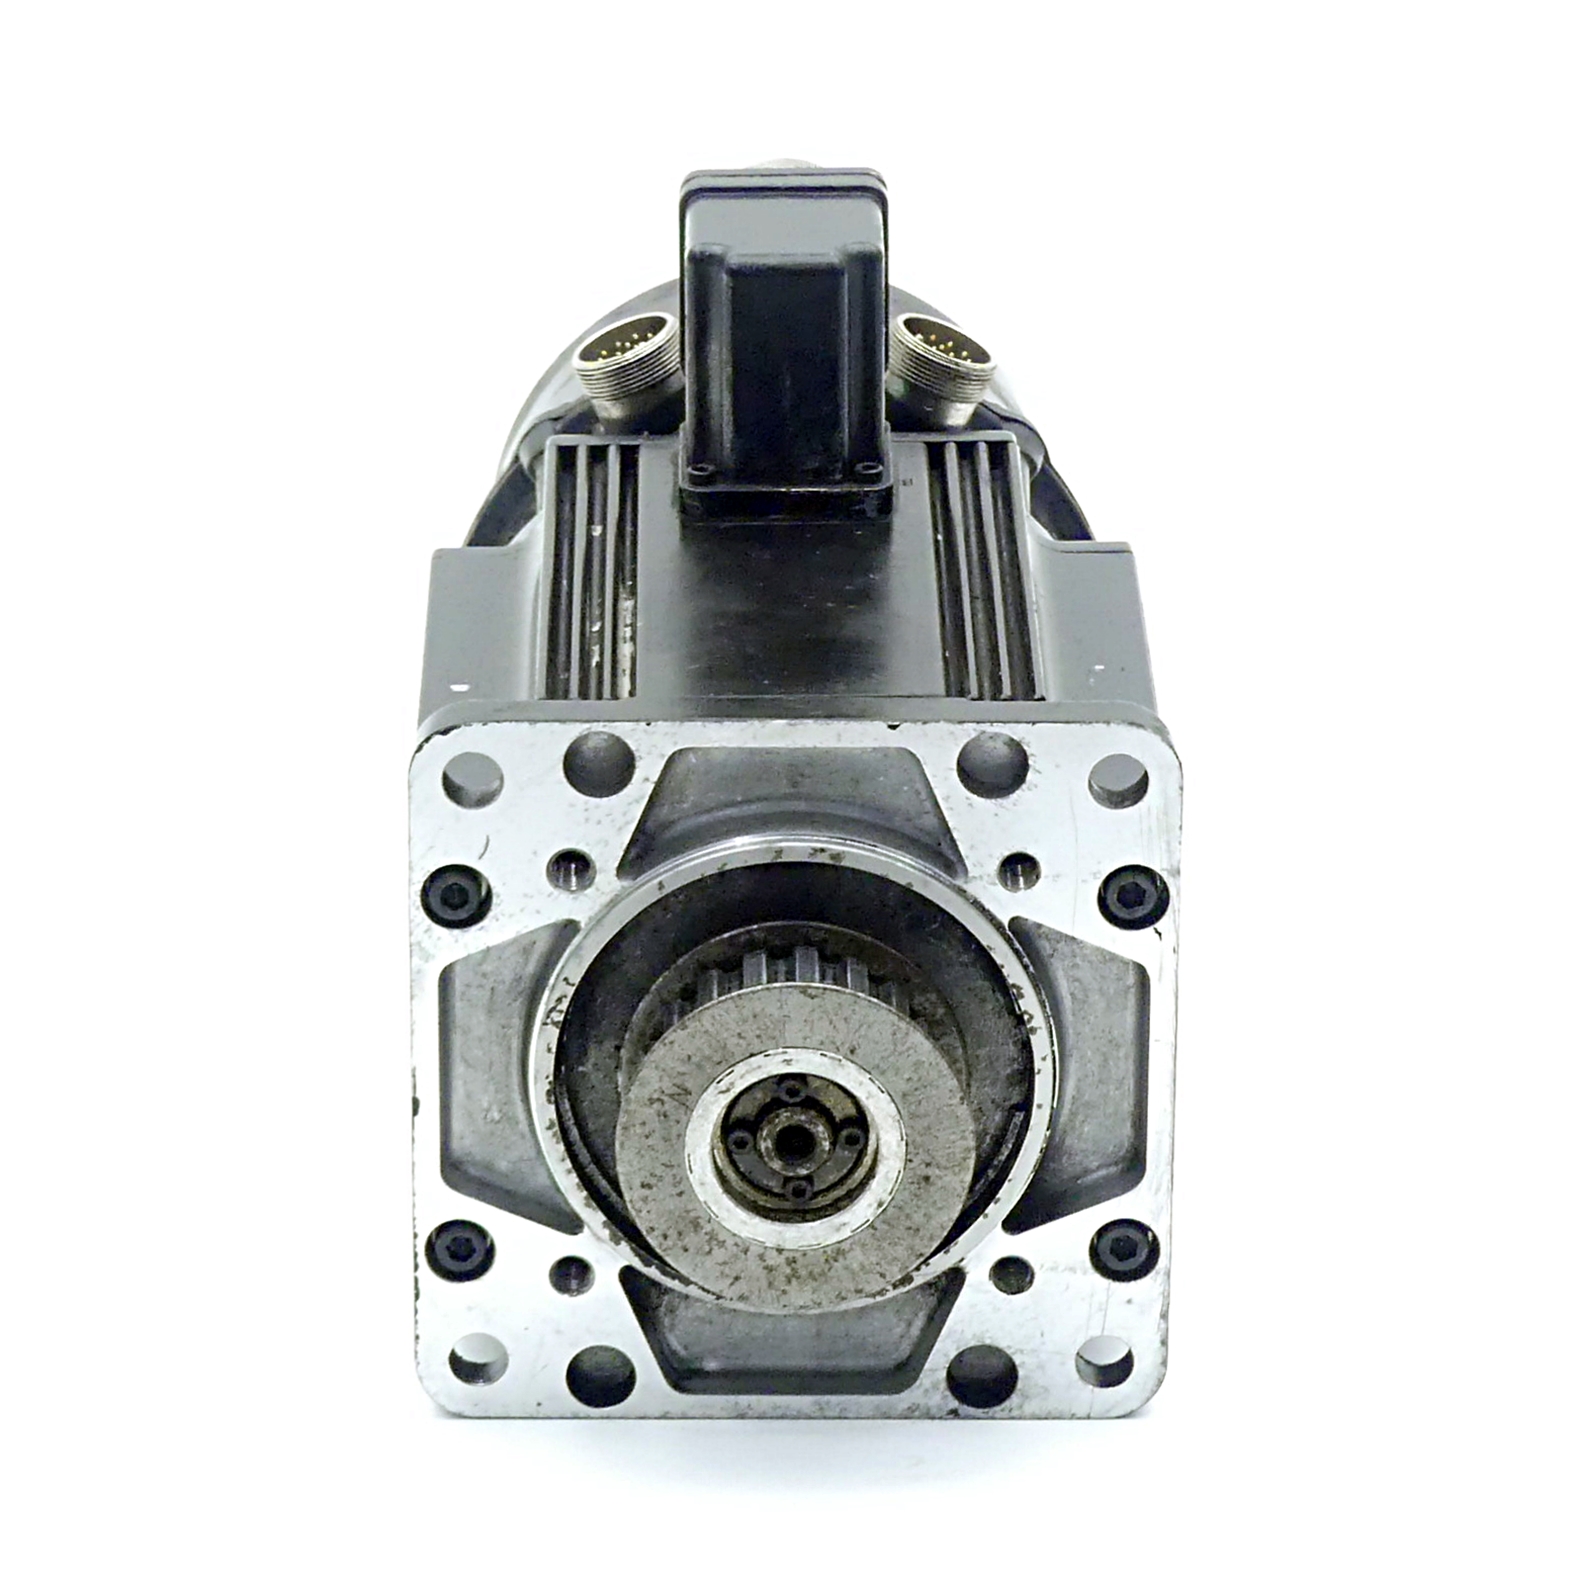 Permanent Magnet three-phase servo motor 092B-0-0D-1-B/095-B-0/I500/ 